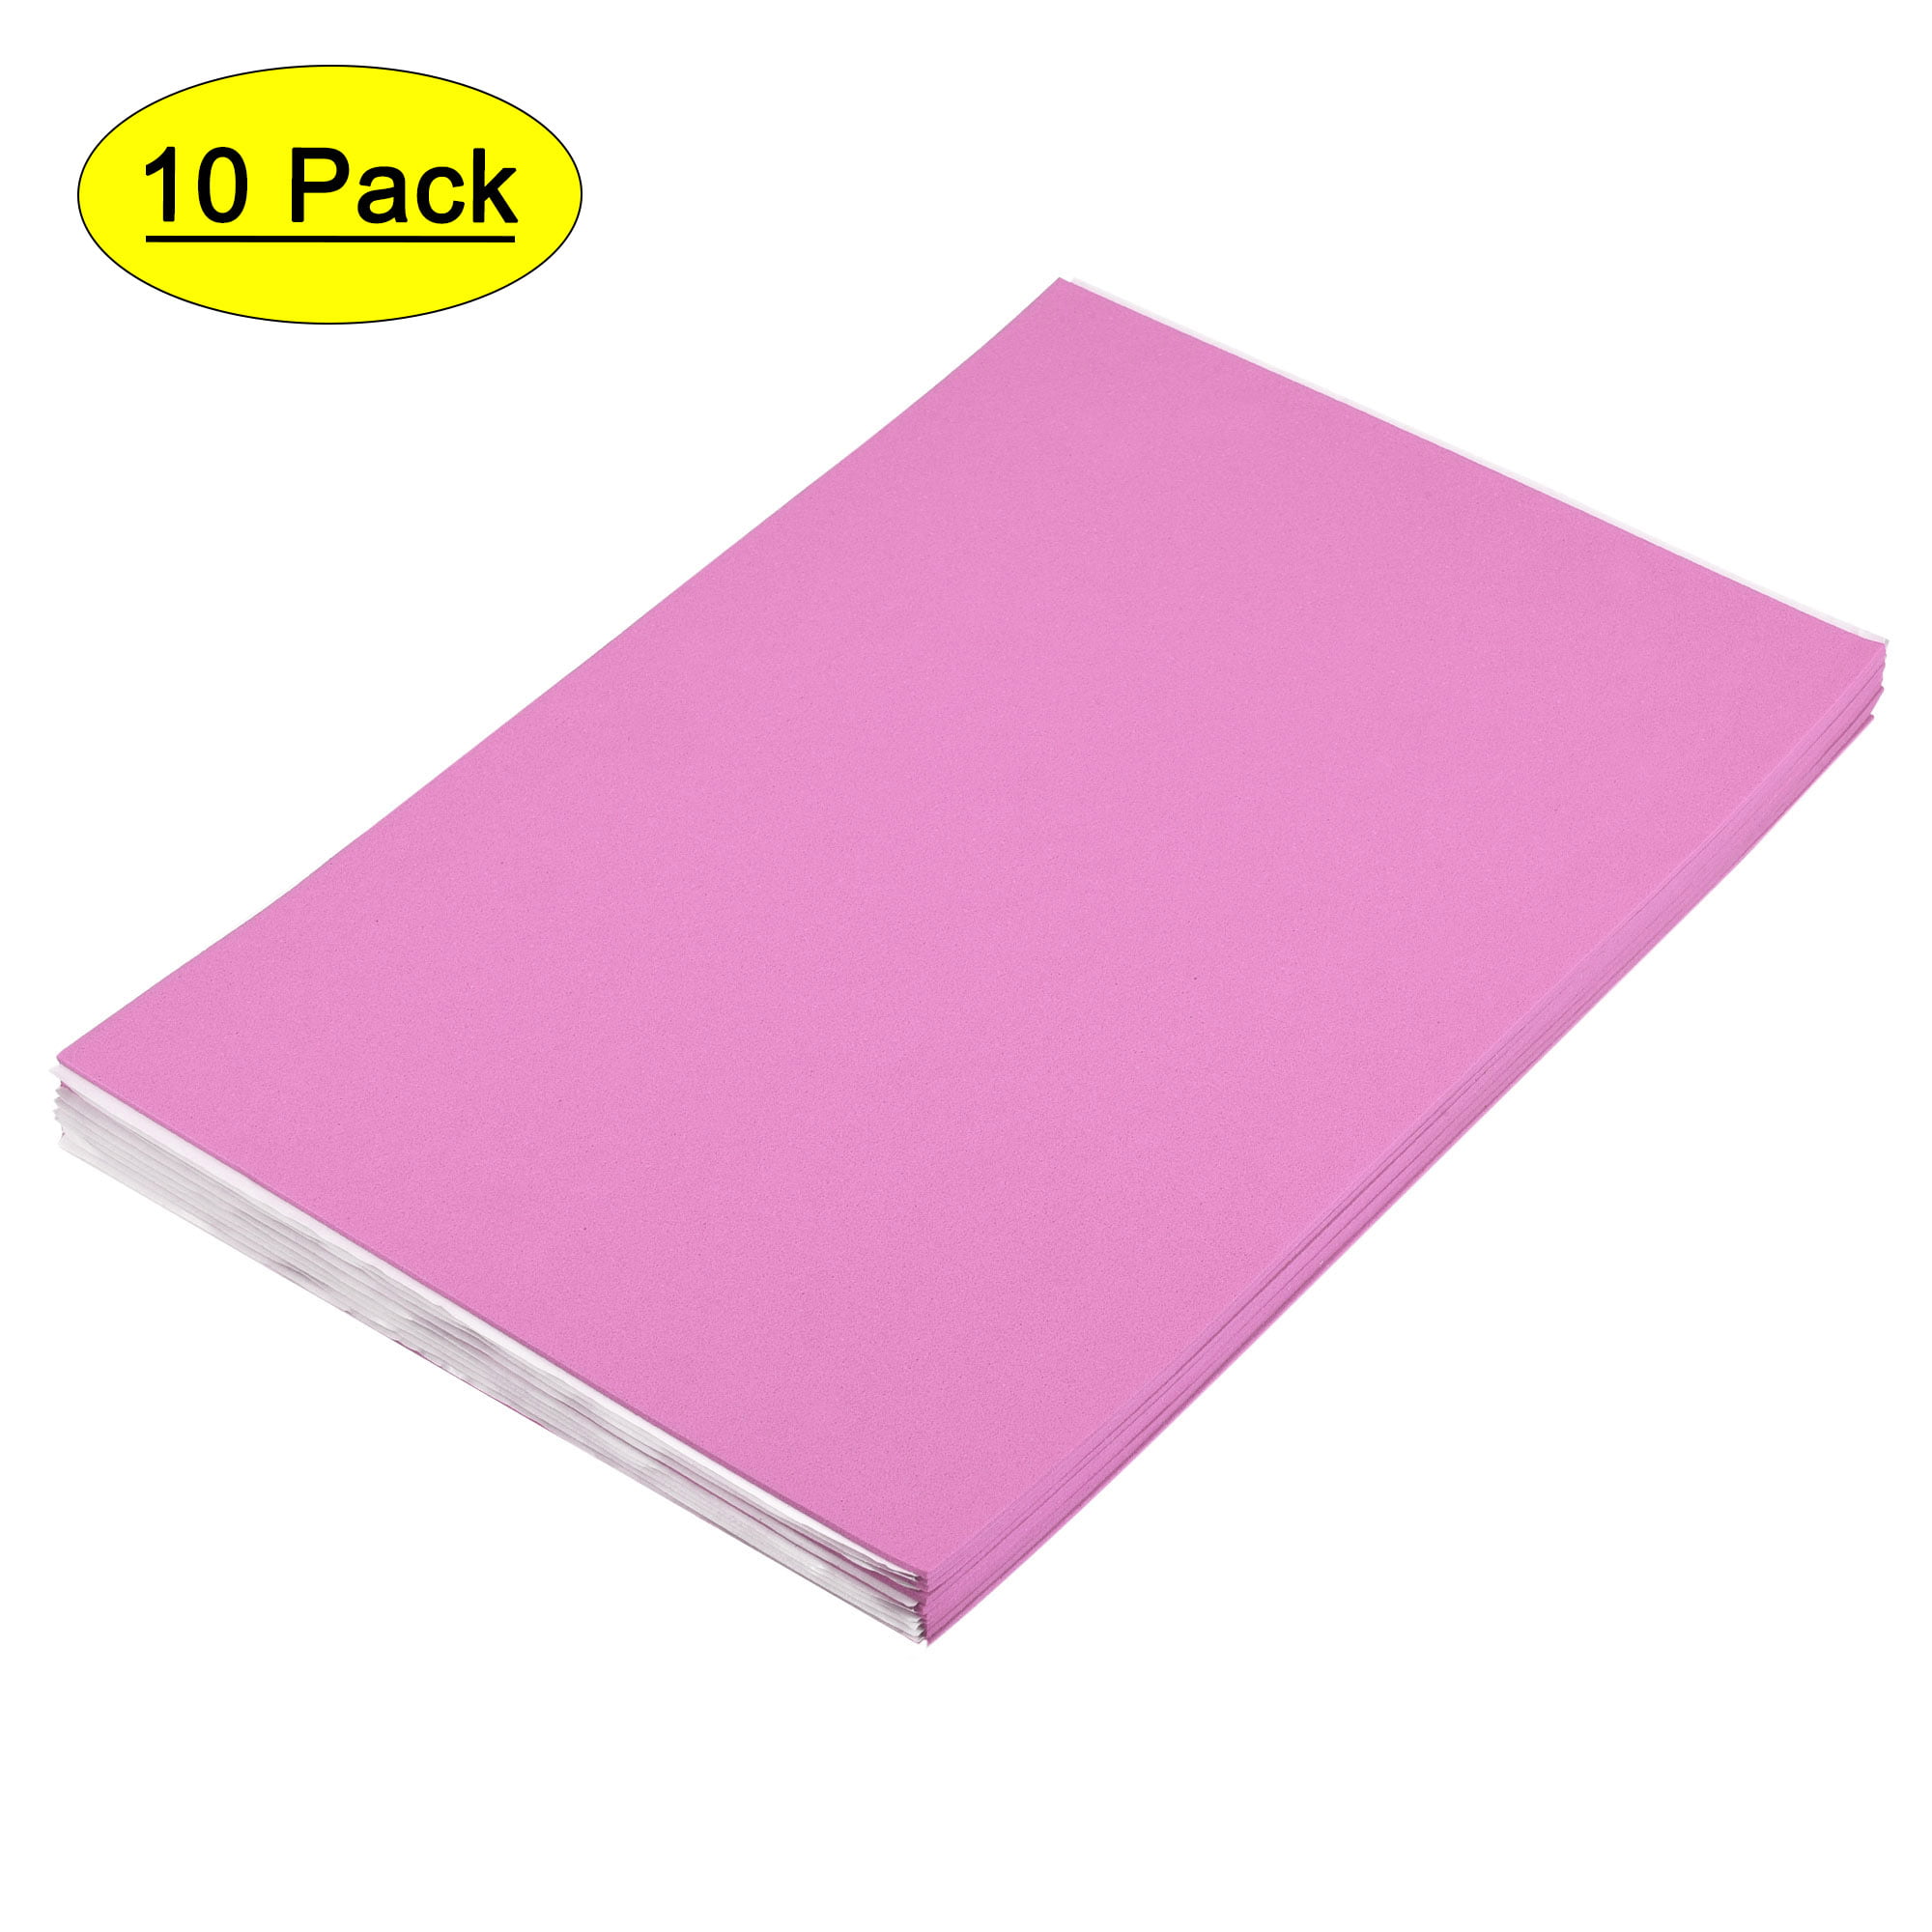 Foam Adhesive Sheets (pack of 3) - Pink and Main LLC